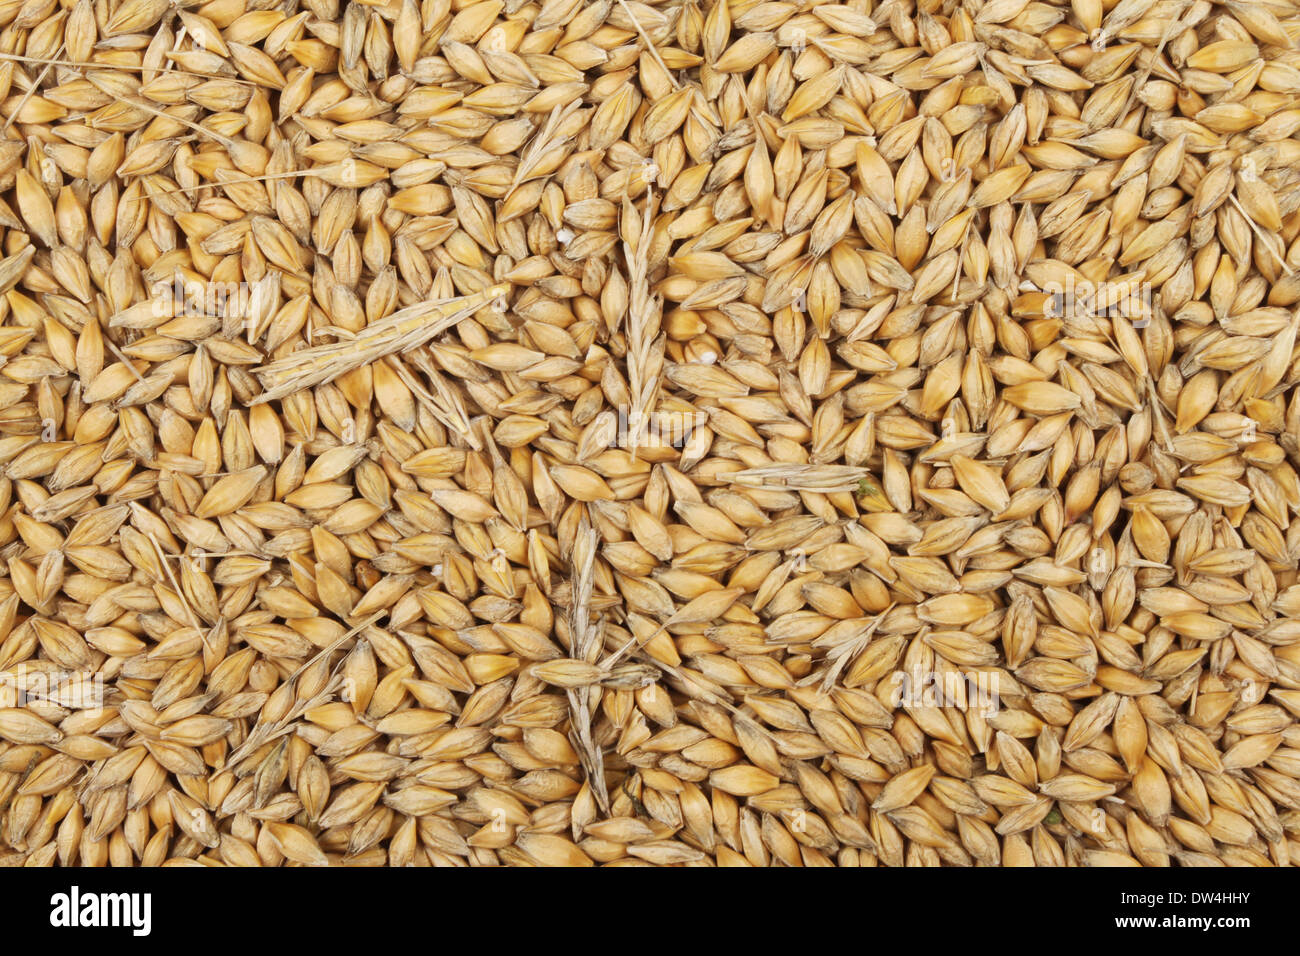 Barley ( Hordeum vulgare L.), seeds and husks closeup Stock Photo